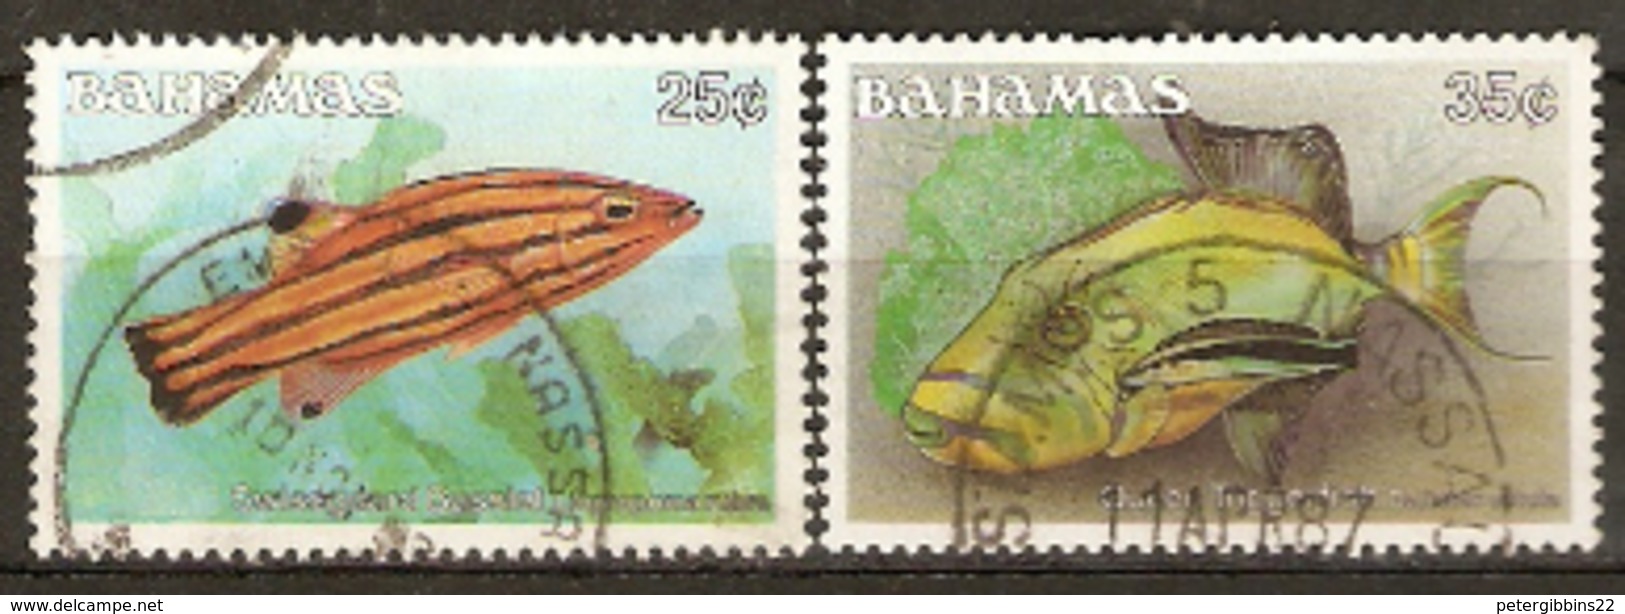 Bahamas 1987   SG 762a-4a  Fishes  Fine Used - Bahamas (1973-...)